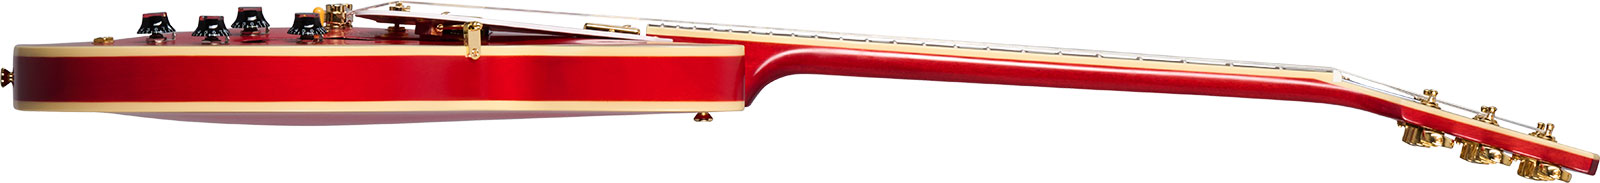 Epiphone Es355 1959 Inspired By 2h Gibson Ht Eb - Vos Cherry Red - Semi hollow elektriche gitaar - Variation 2